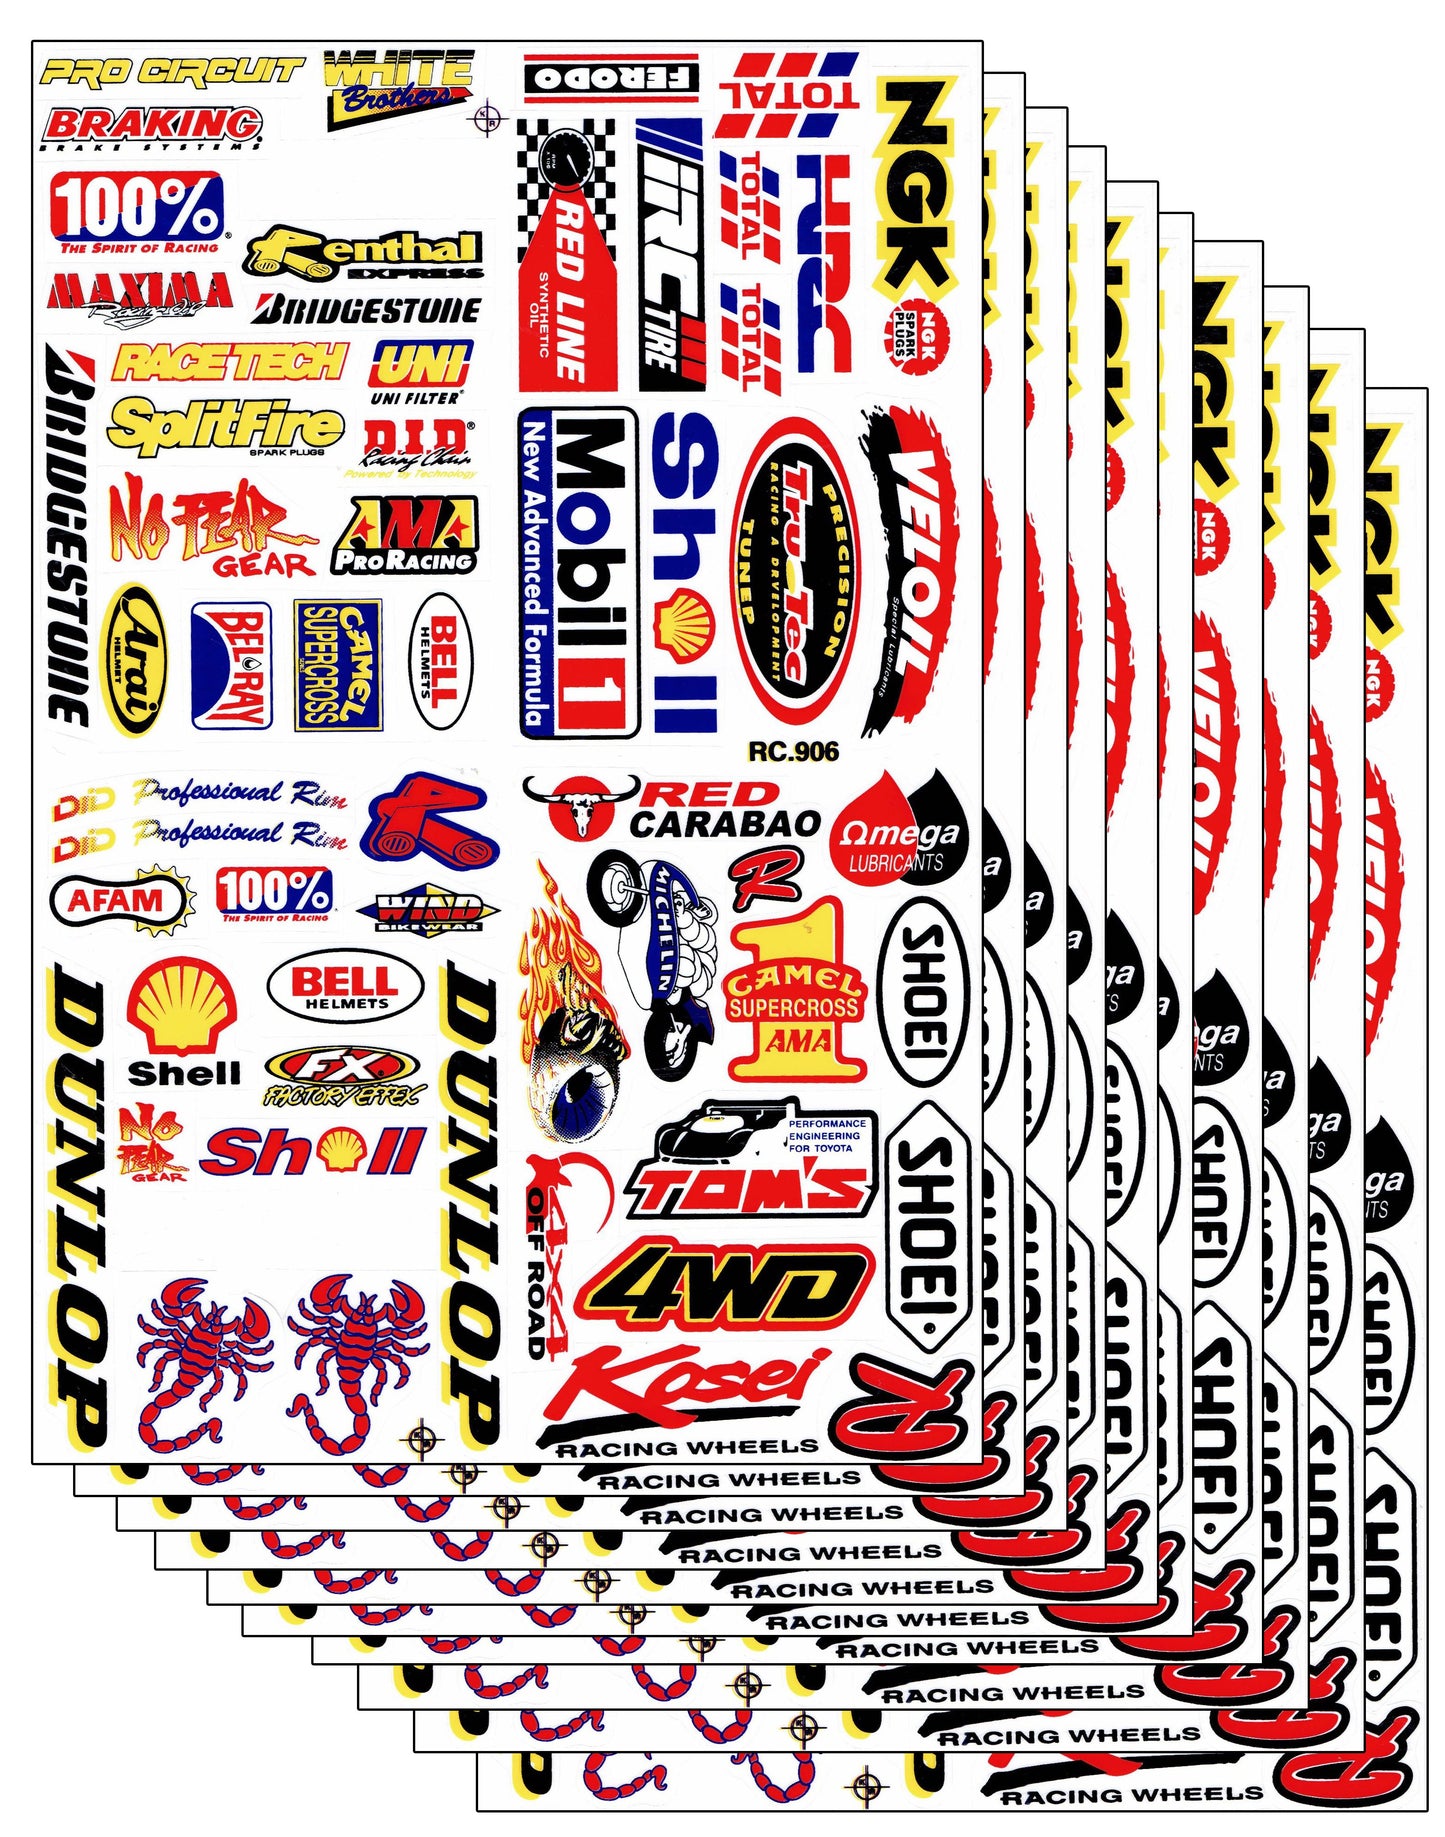 10ER Vorteilspack Sponsoren Logo Aufkleber Sticker Motorrad Moped Roller Skateboard Auto Tuning Modellbau selbstklebend 174